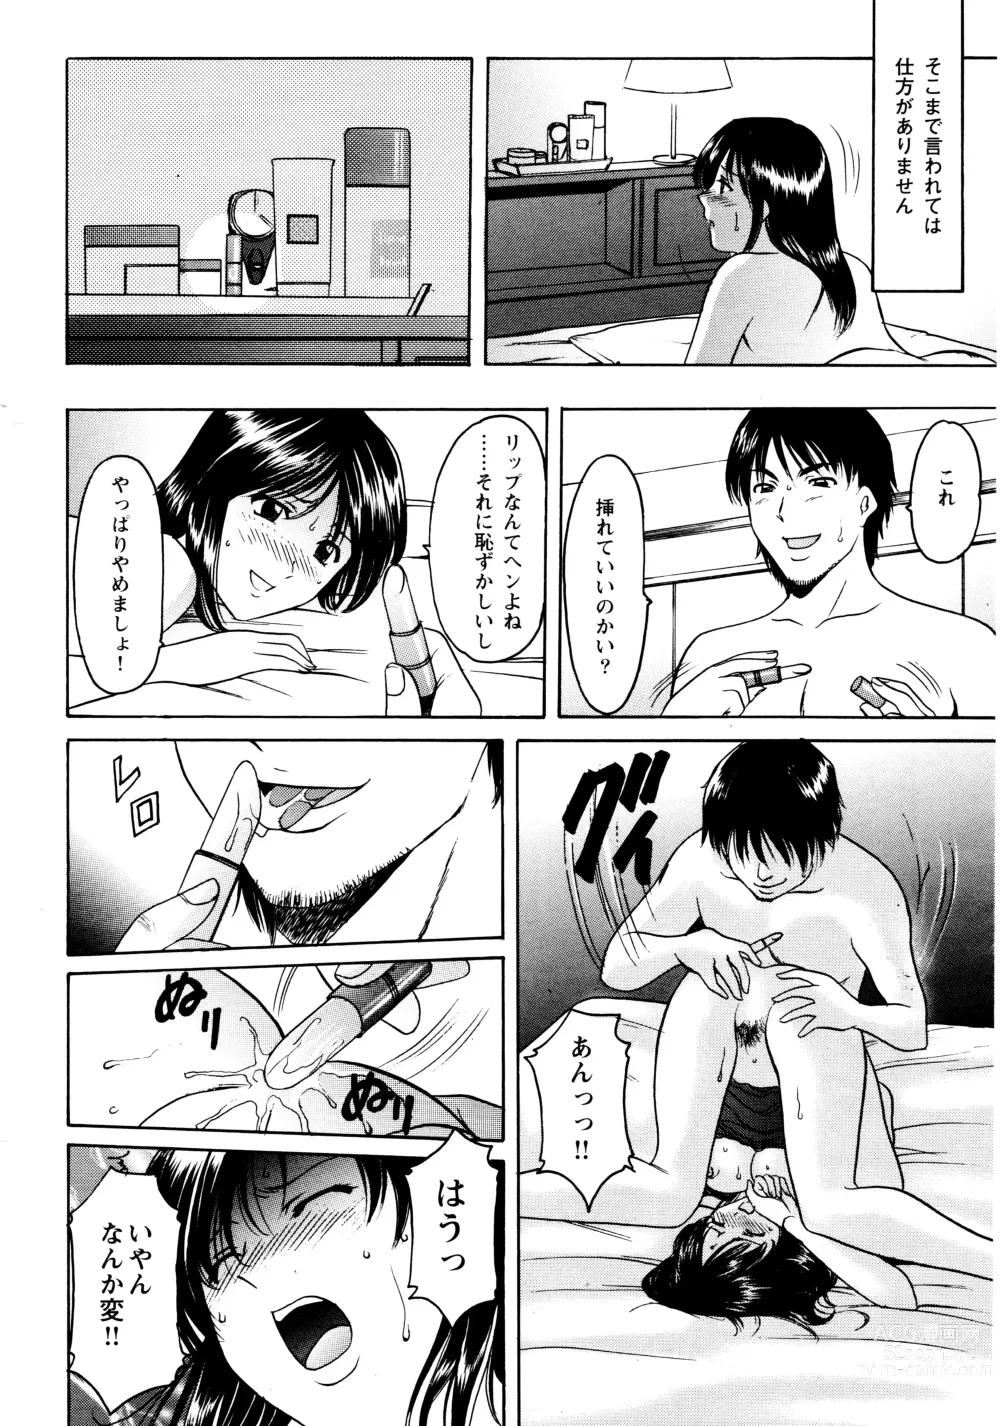 Page 5 of doujinshi Mi Comic-ka Sakuhinshou 2